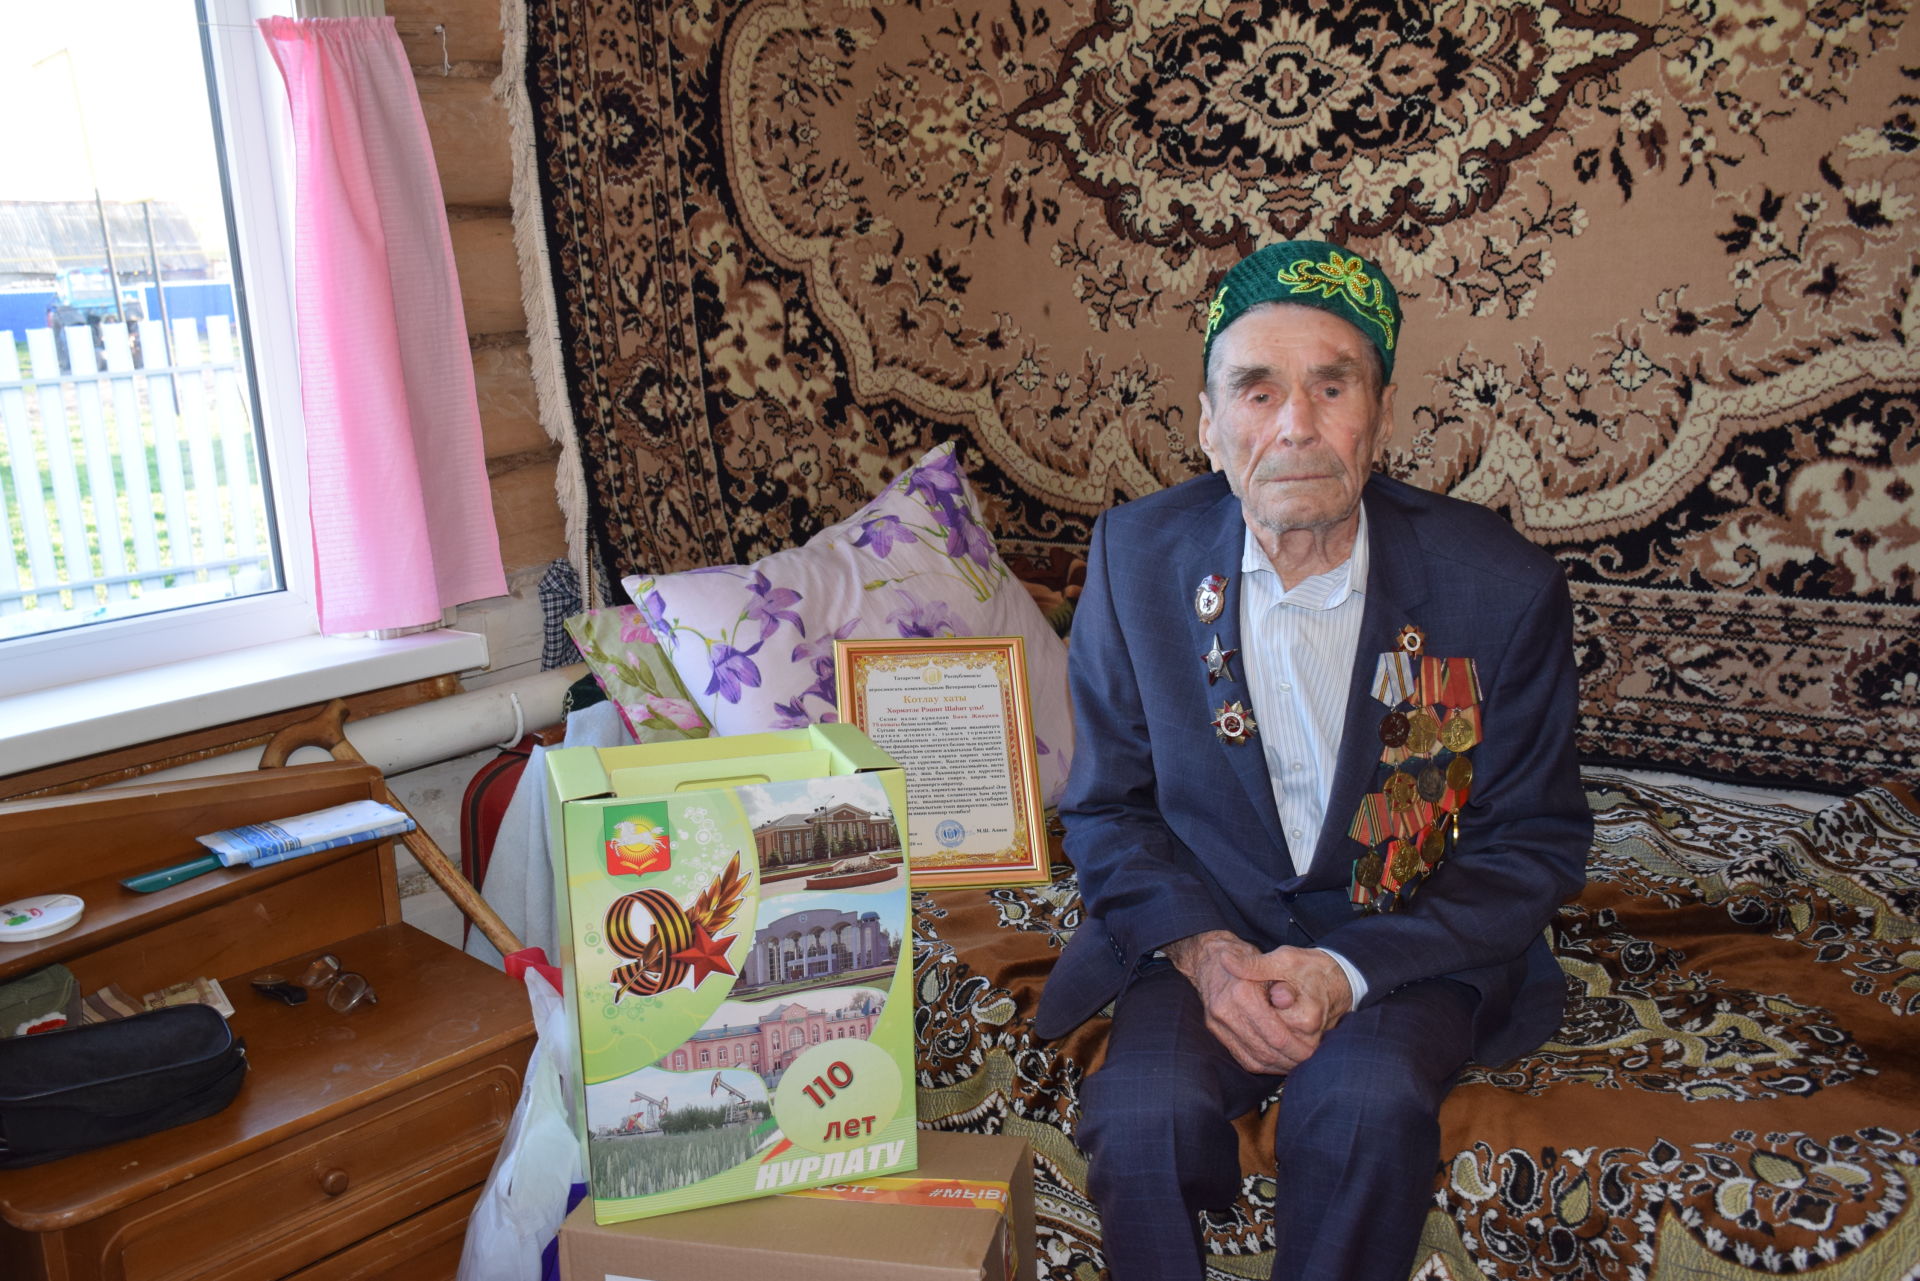 Рәшит Гатин: “Сугышта мине “сын татарского народа” дип йөртәләр иде”